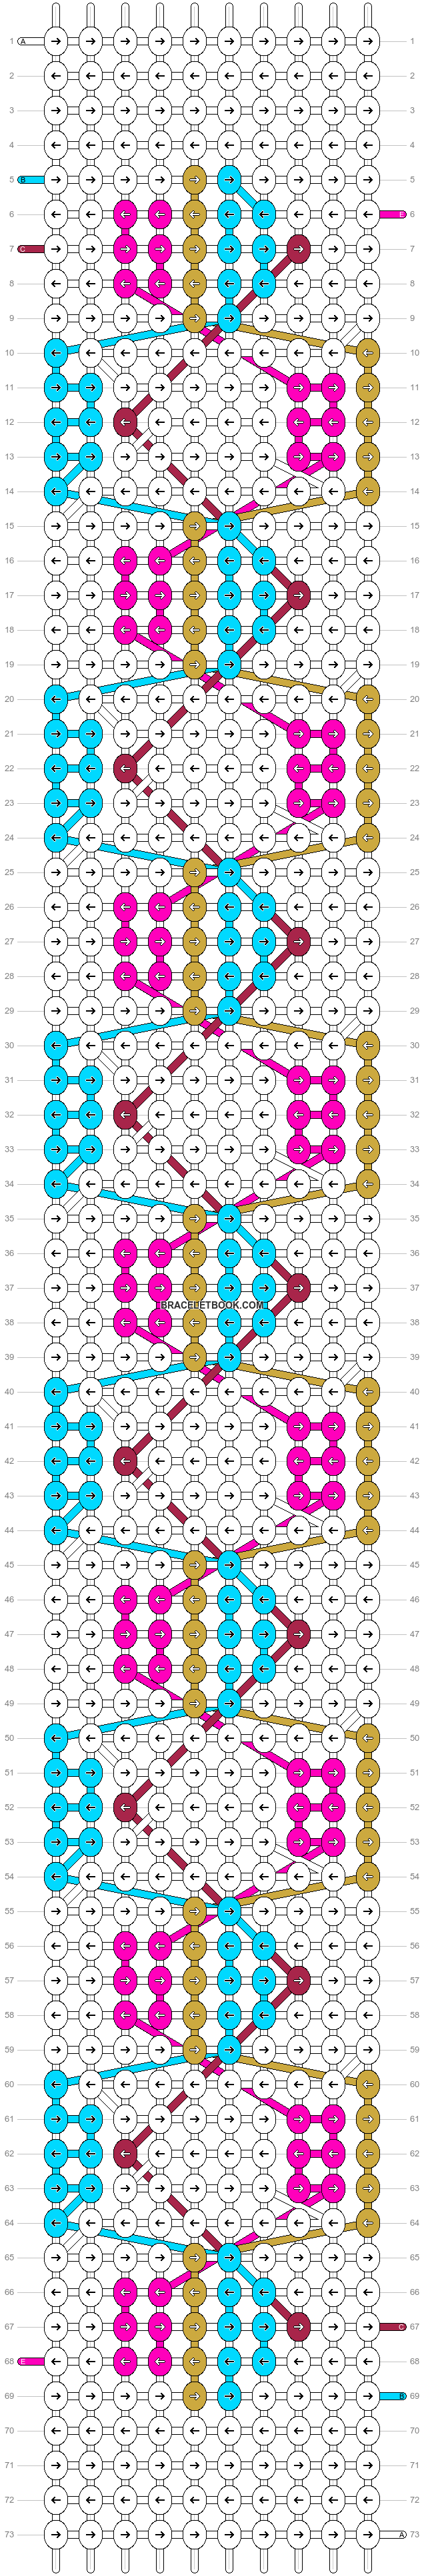 Alpha pattern #38964 variation #45589 pattern